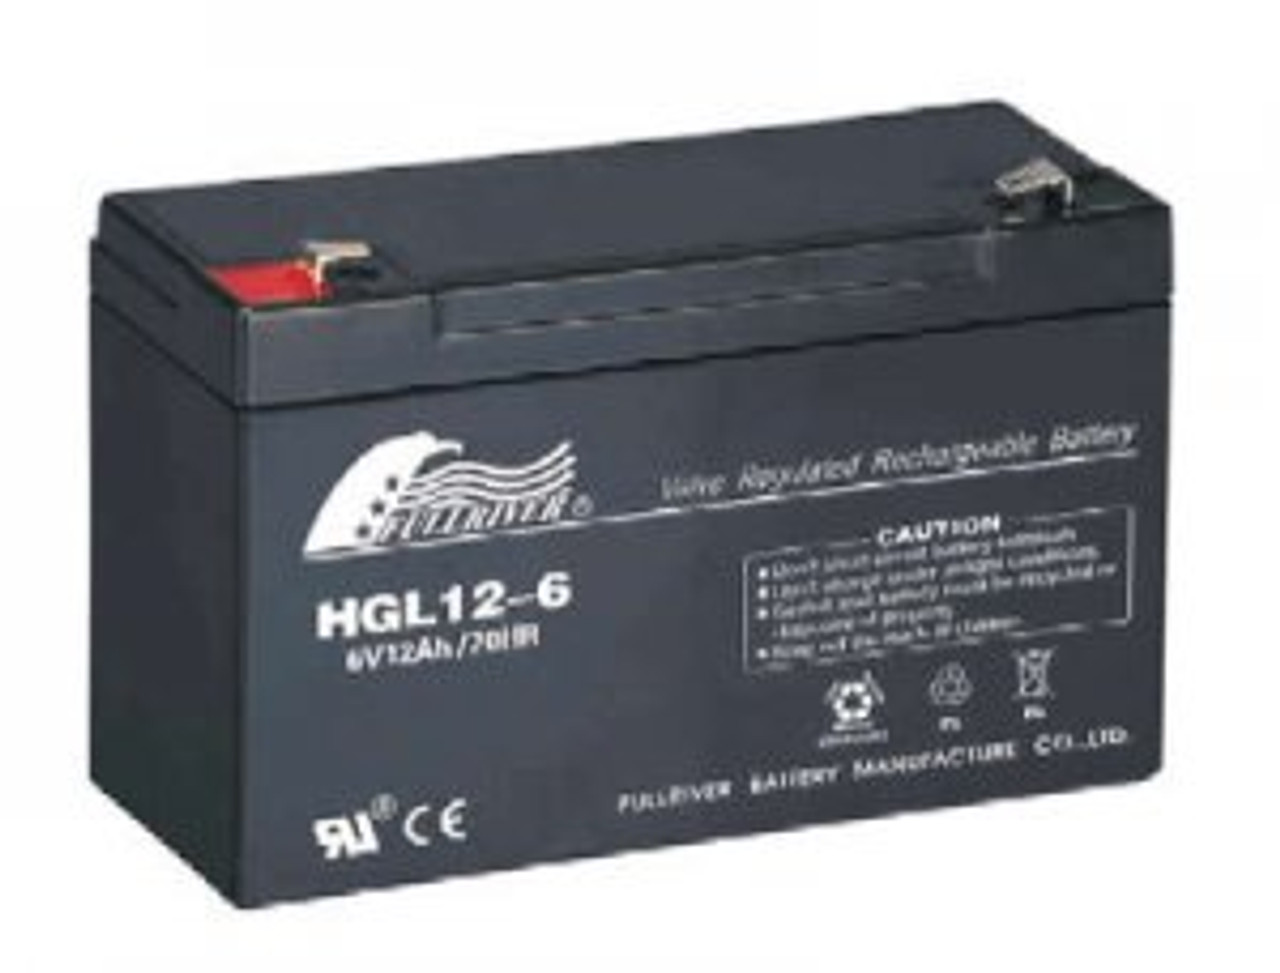 6v] 6 Volt 10AH Rechargeable Battery for Kids Electric Car - Kids